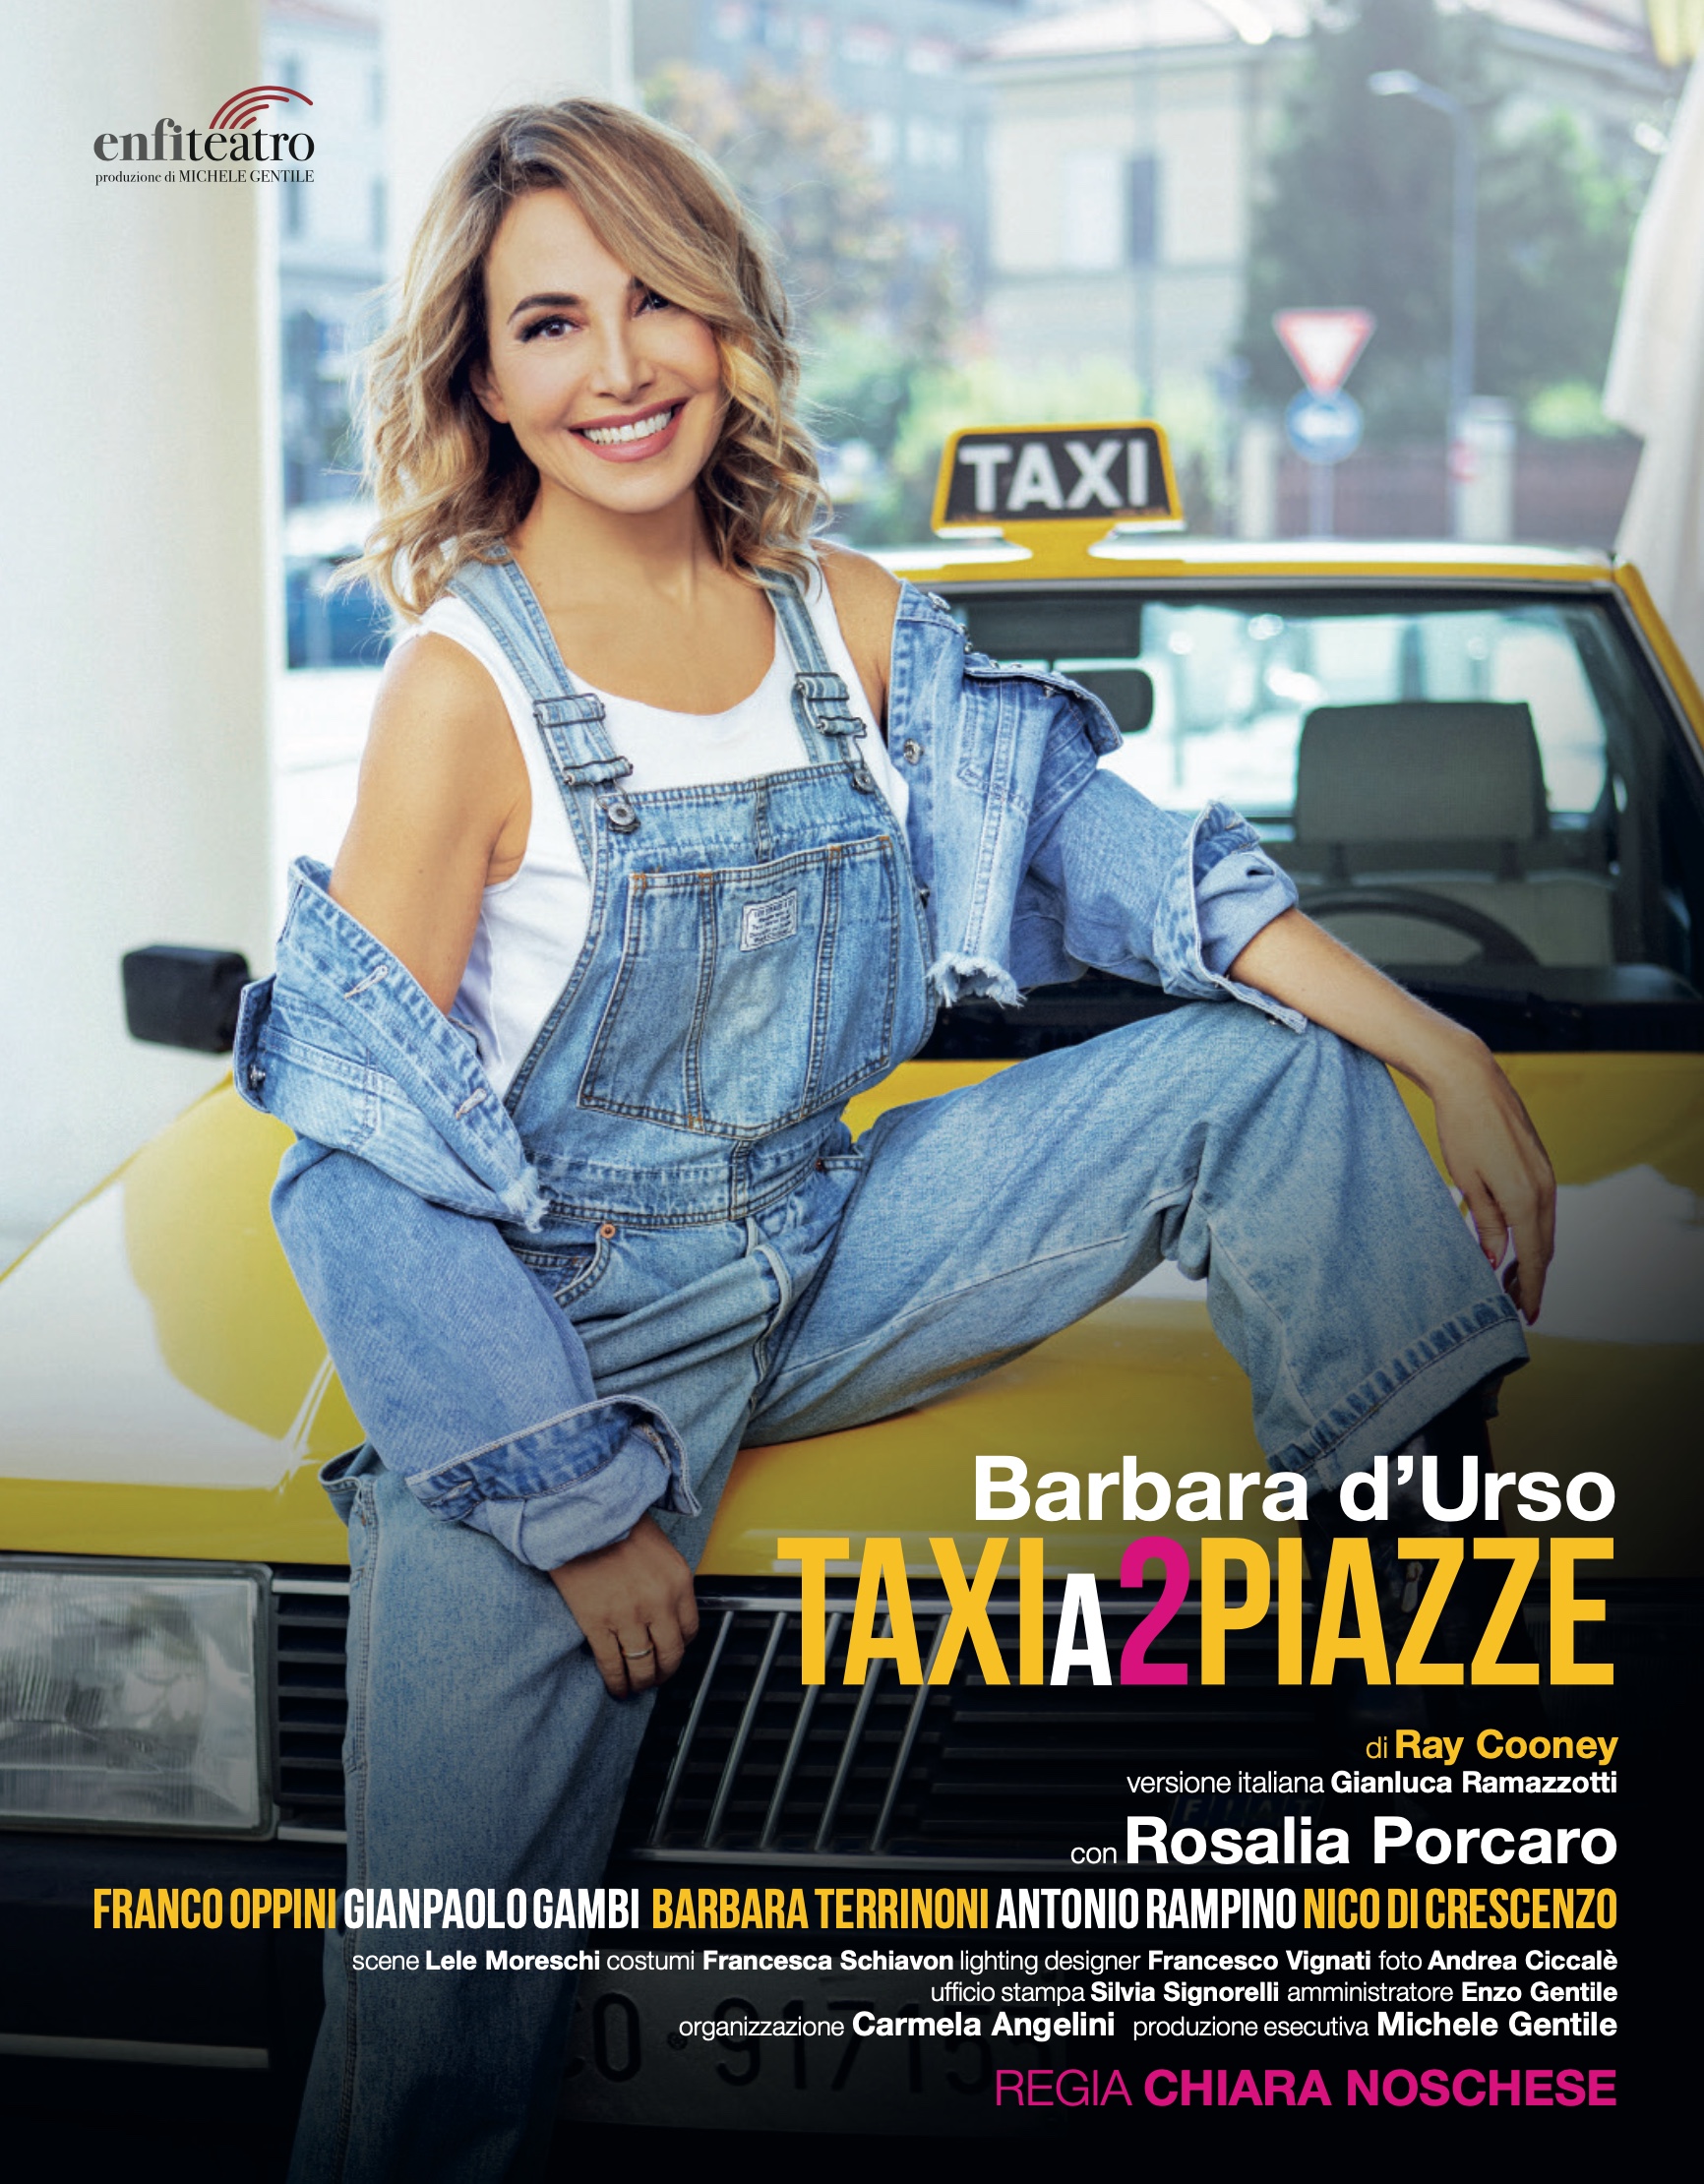 Barbara D’Urso – Taxi a due piazze 23 MARZO 2023 - giovedì - ore 21.00